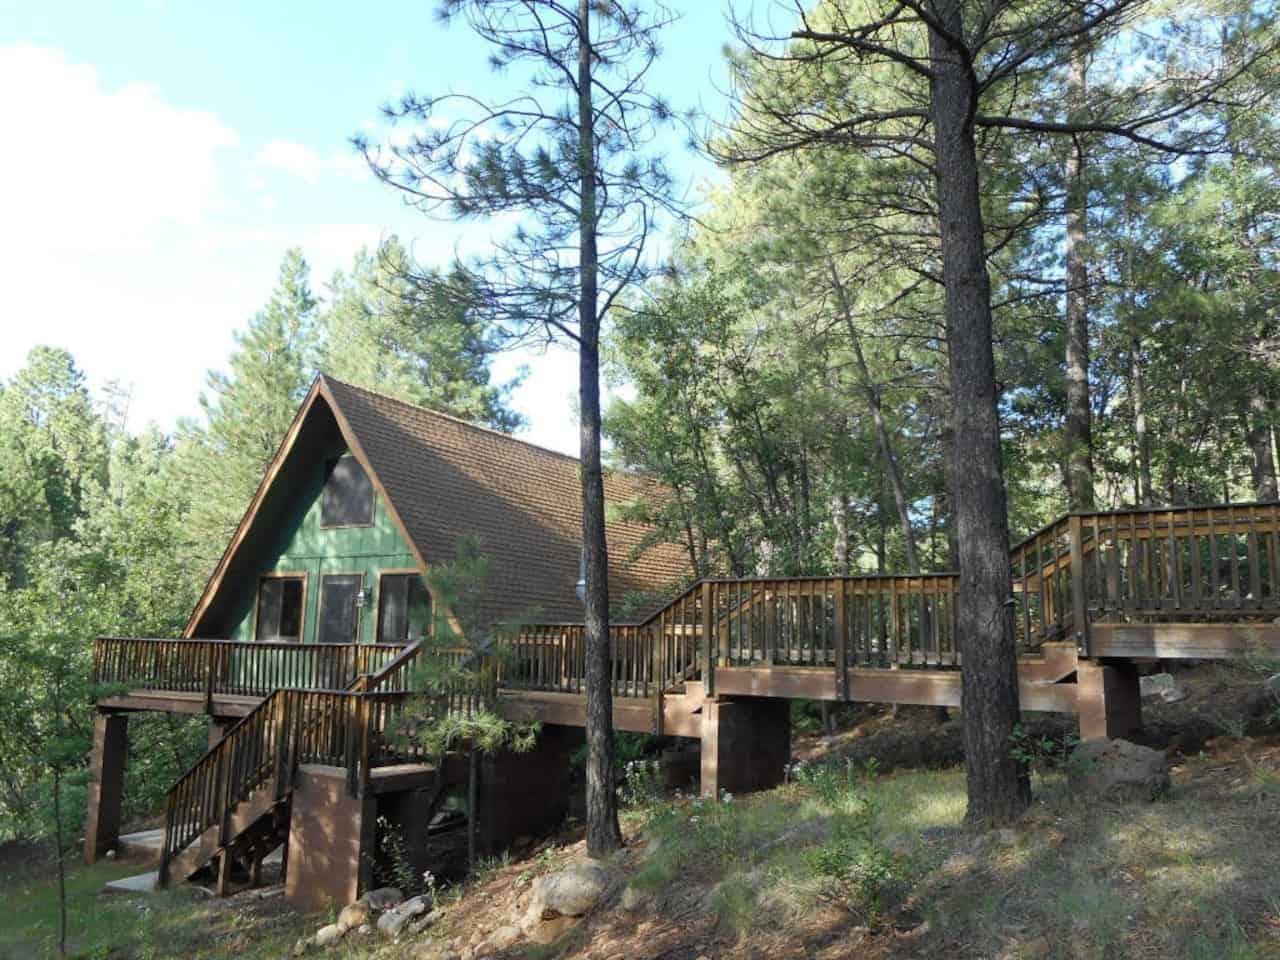 Image of Airbnb rental in Sedona Arizona